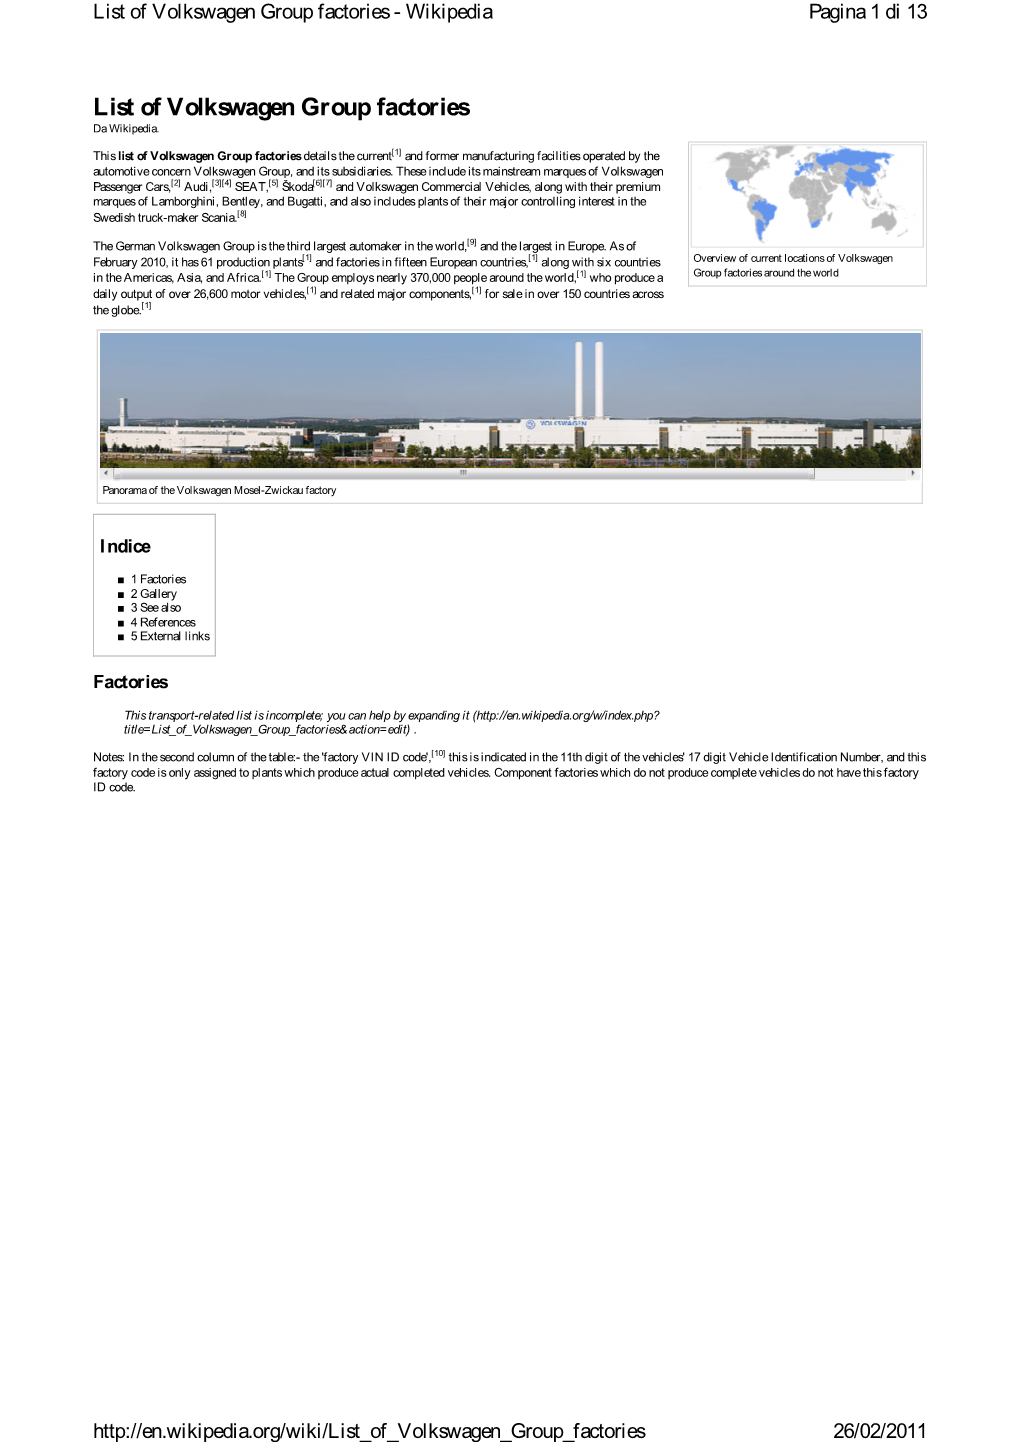 List of Volkswagen Group Factories - Wikipedia Pagina 1 Di 13